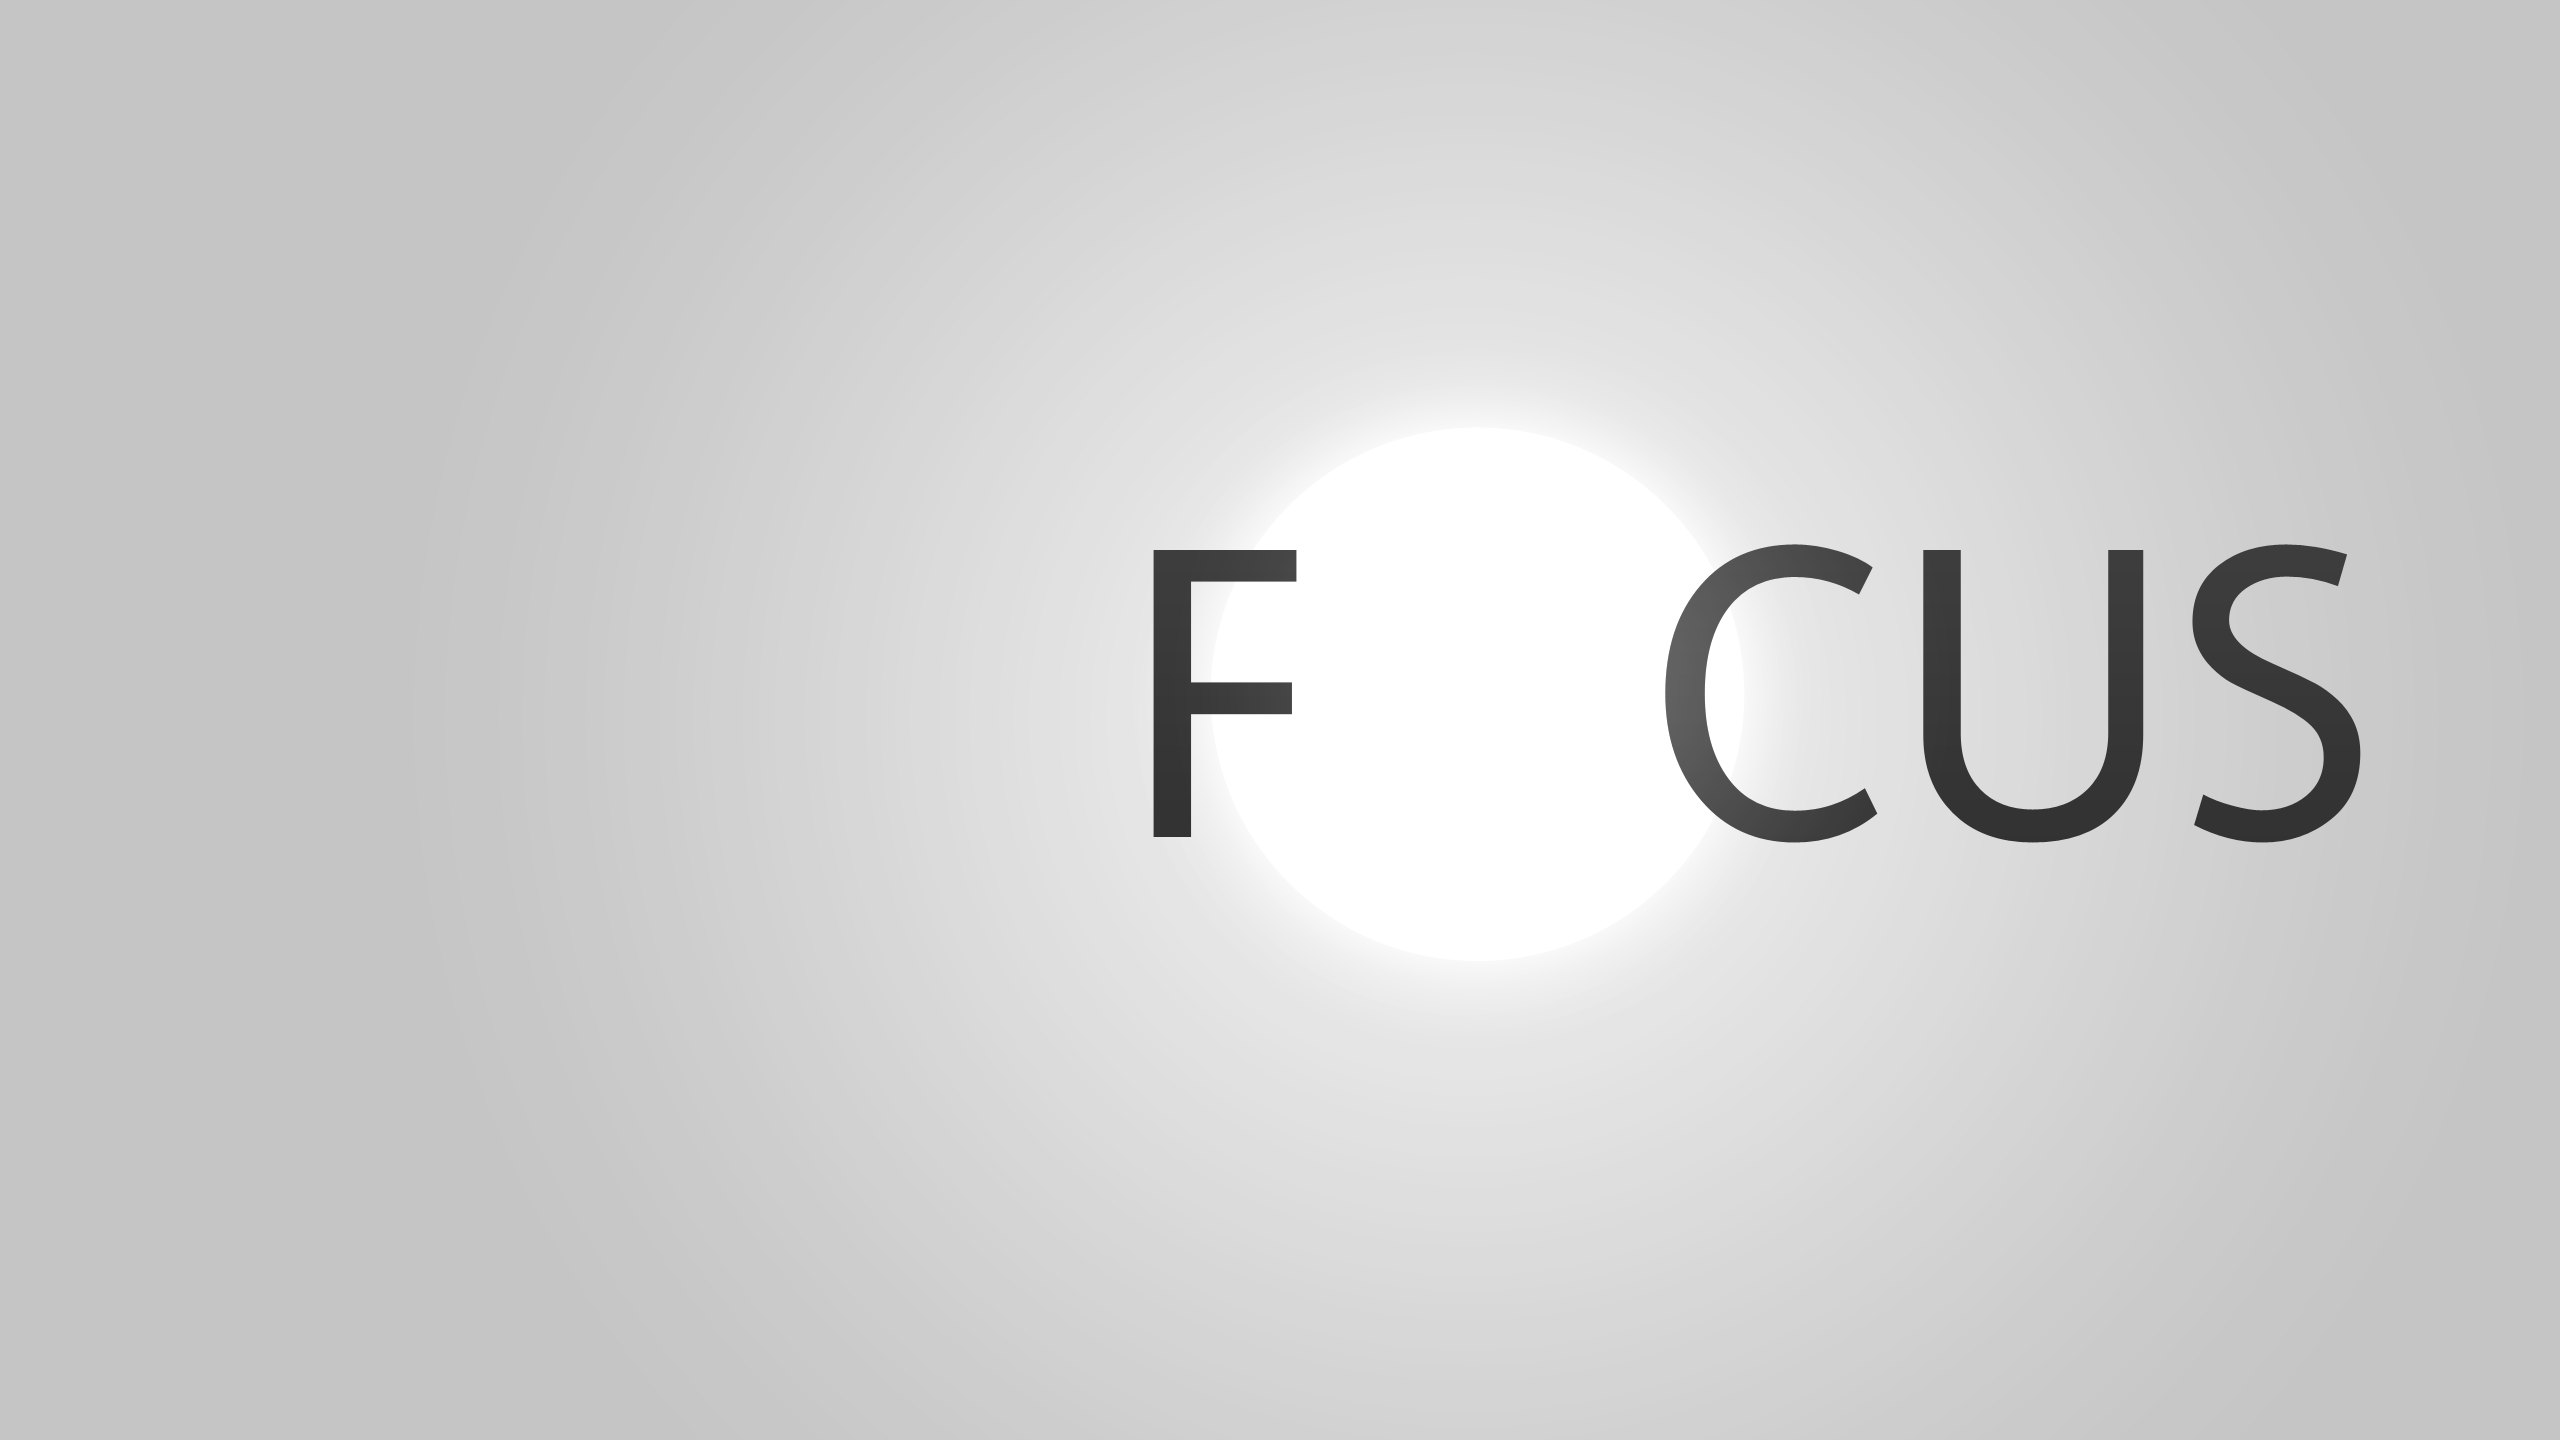 QFE17: Focus Wallpaper in Best Resolutions, HQFX